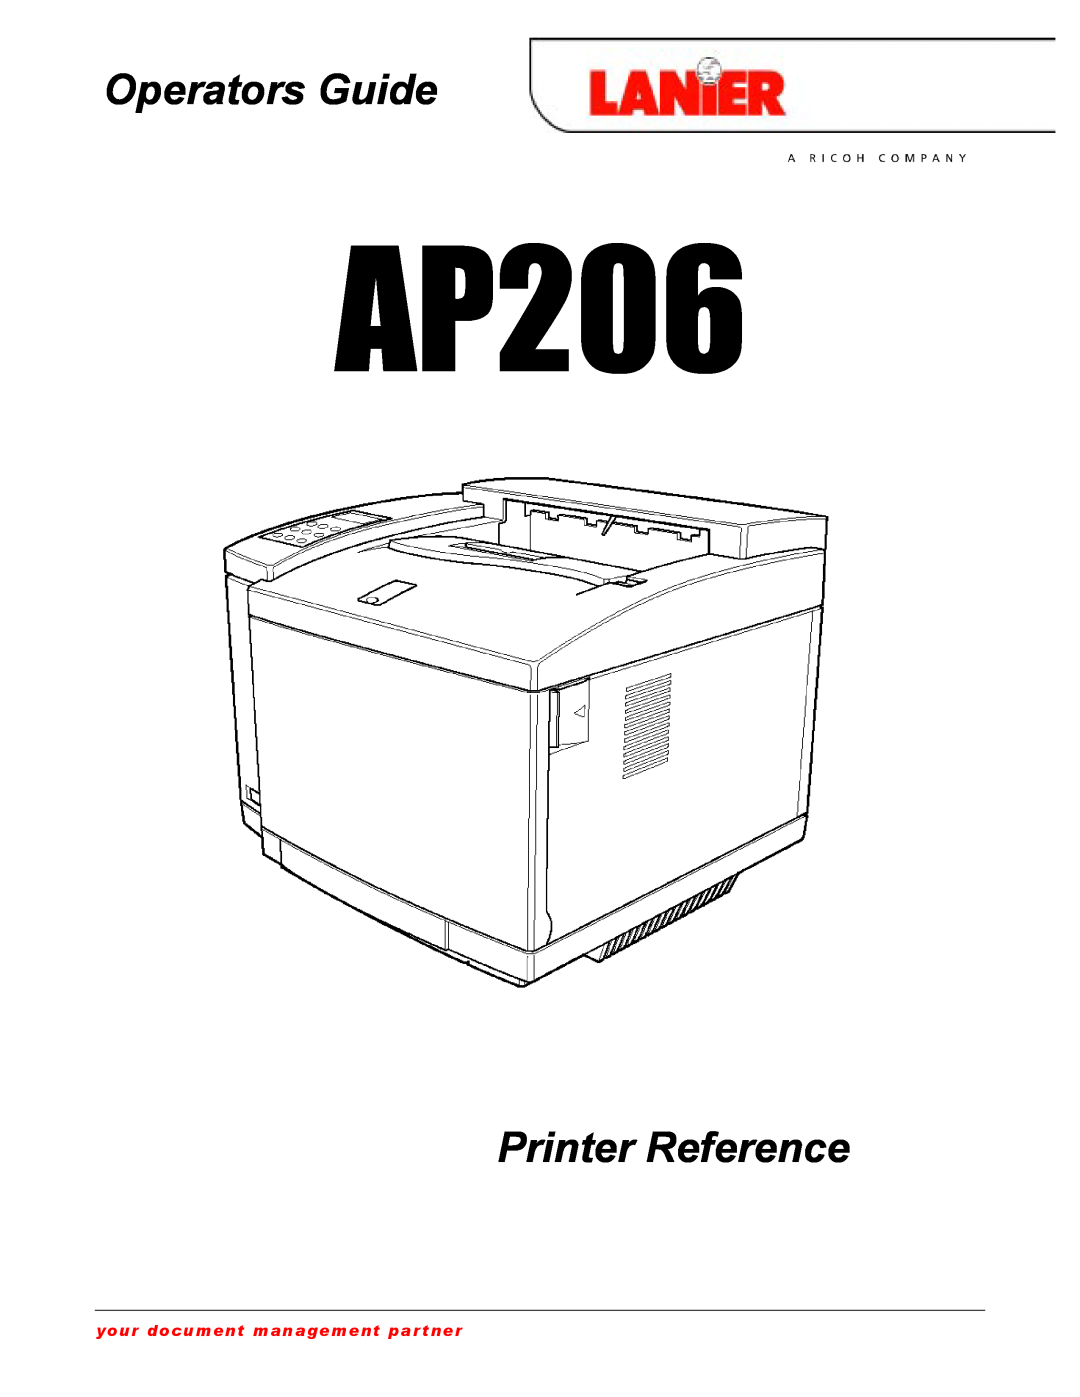 Lanier AP206 manual Operators Guide, Printer Reference, your document management partner 